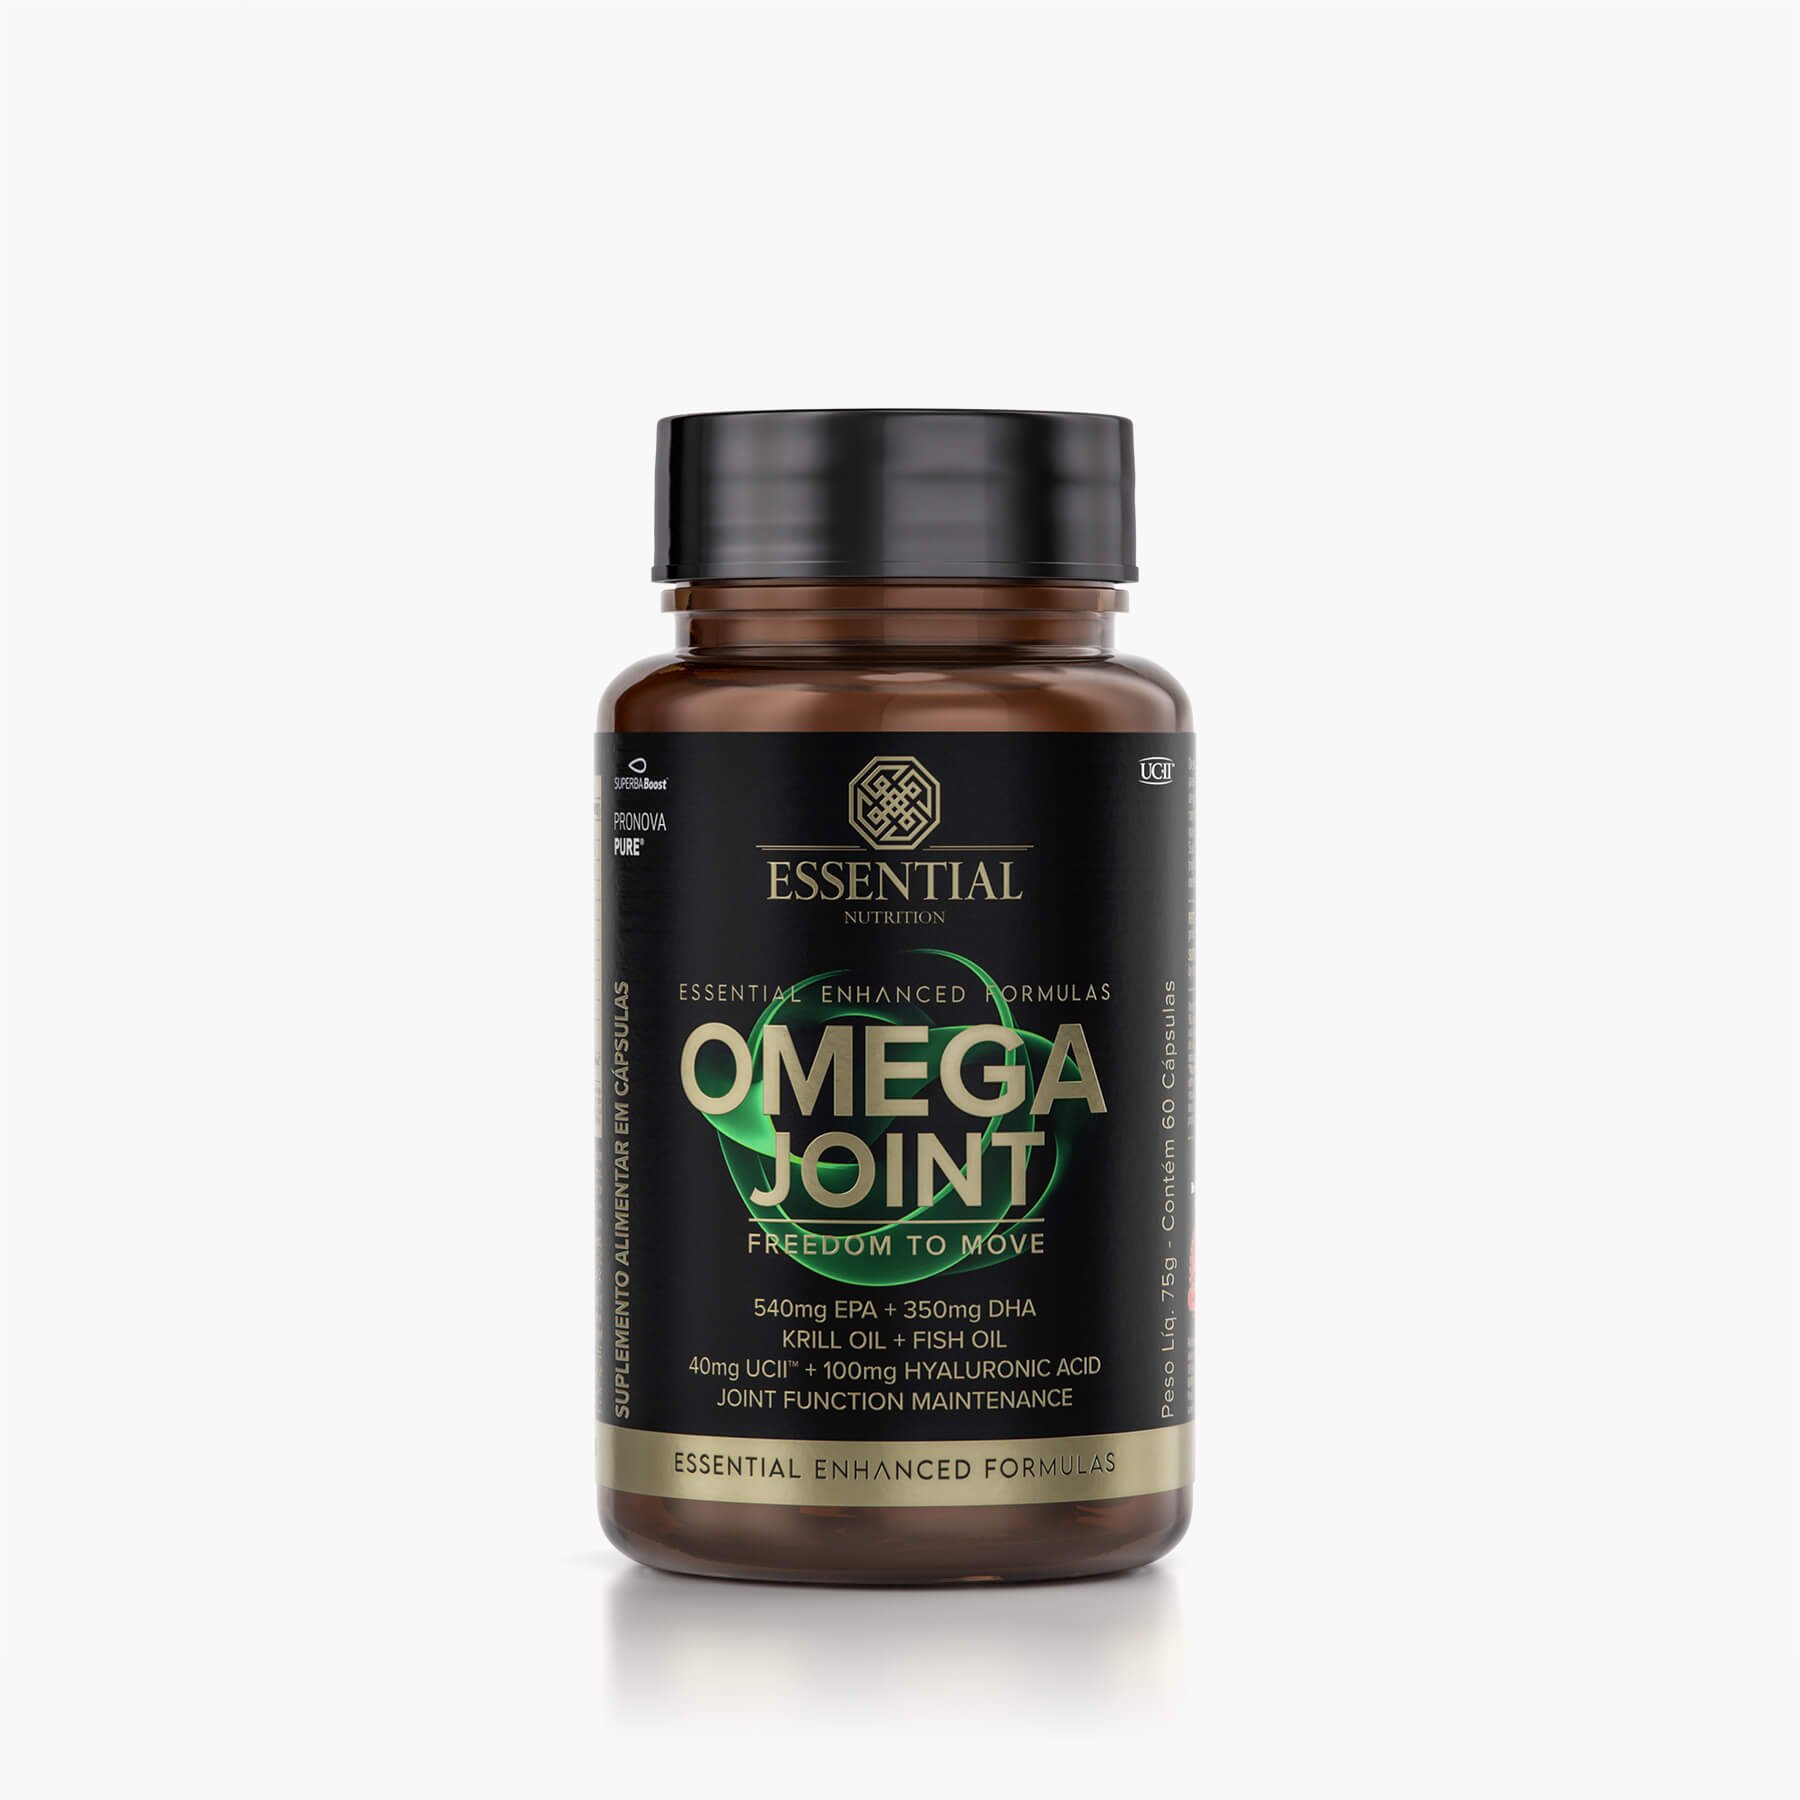 Omega Joint 60 cápsulas - 30 doses